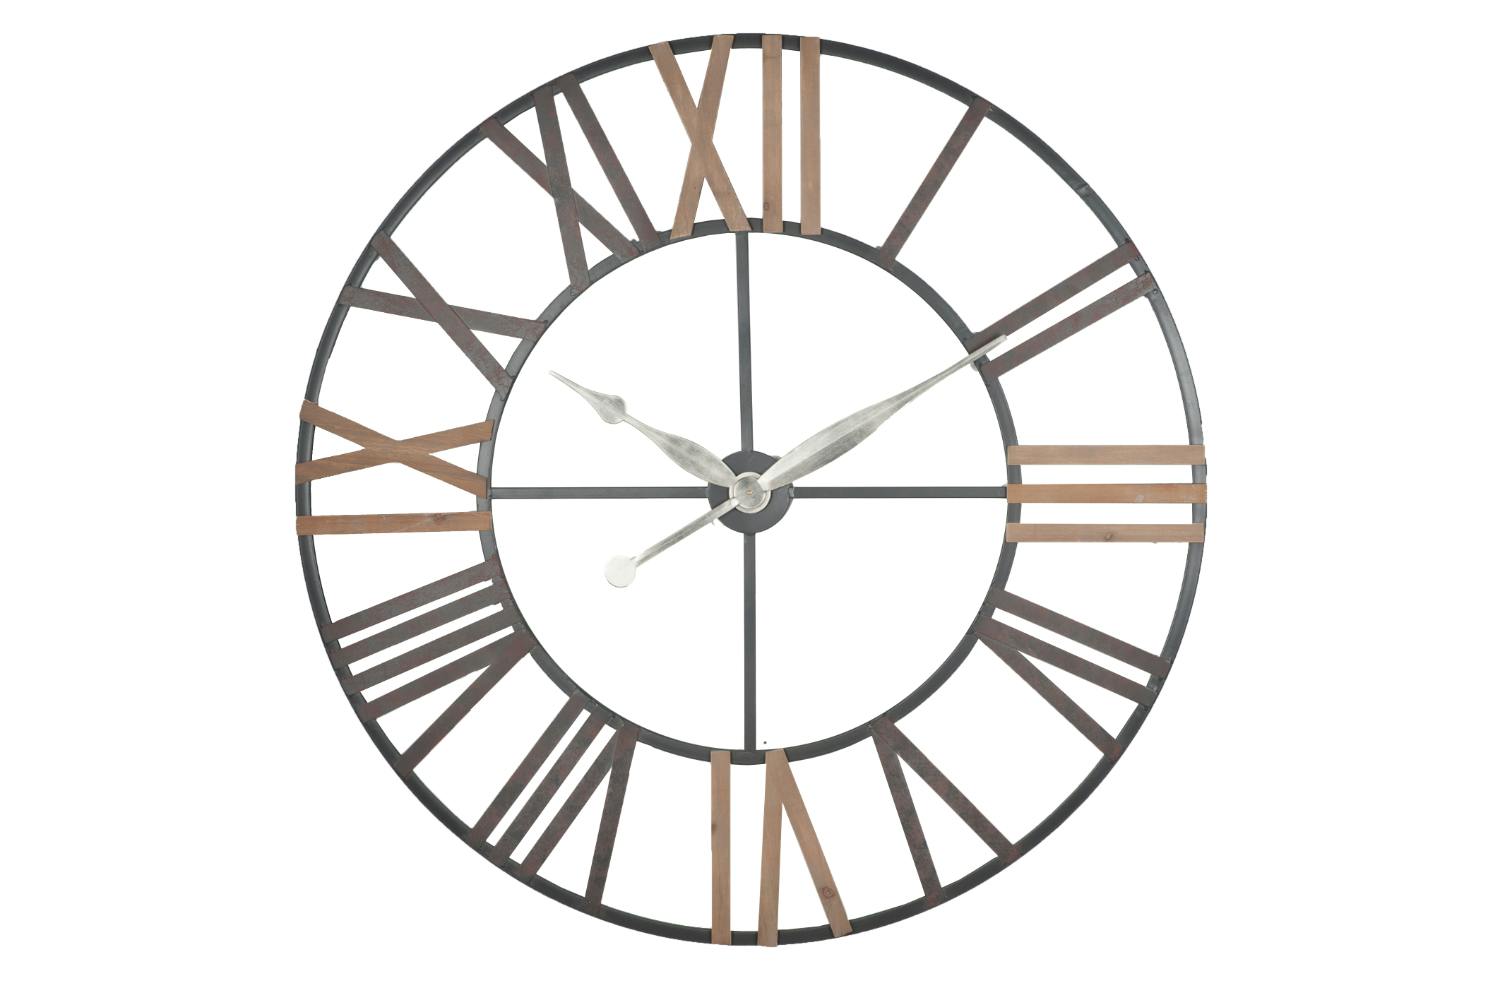 Round Wall Clock